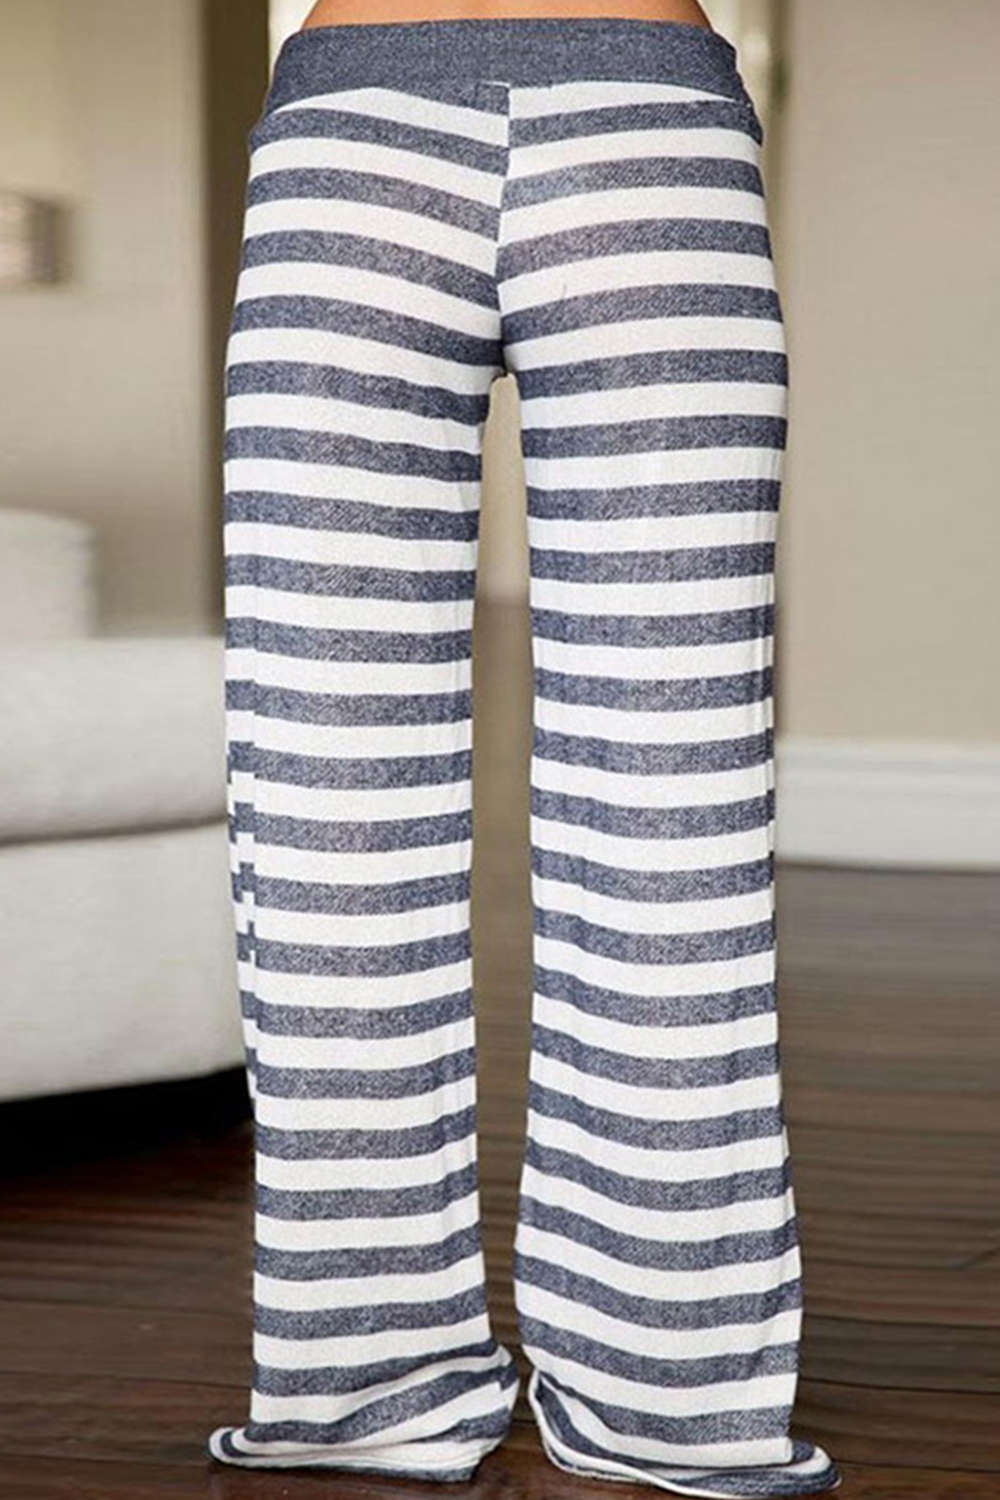 Iyasson Women's Loose Stripe Home Pants